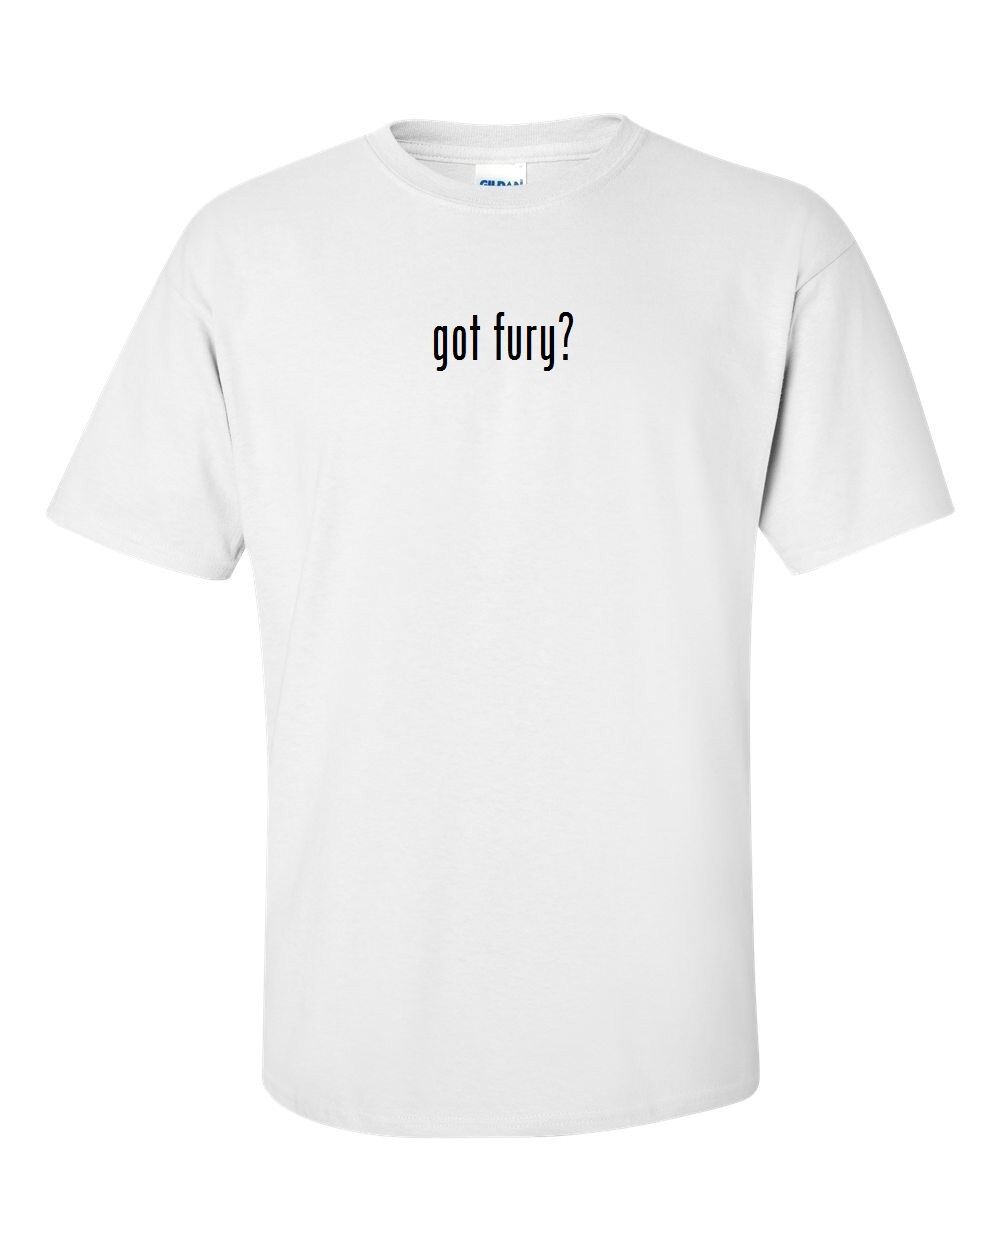 Got Fury ? Mens Cotton T-Shirt Shirt Solid Black White Funny Joke Gift S M L XL